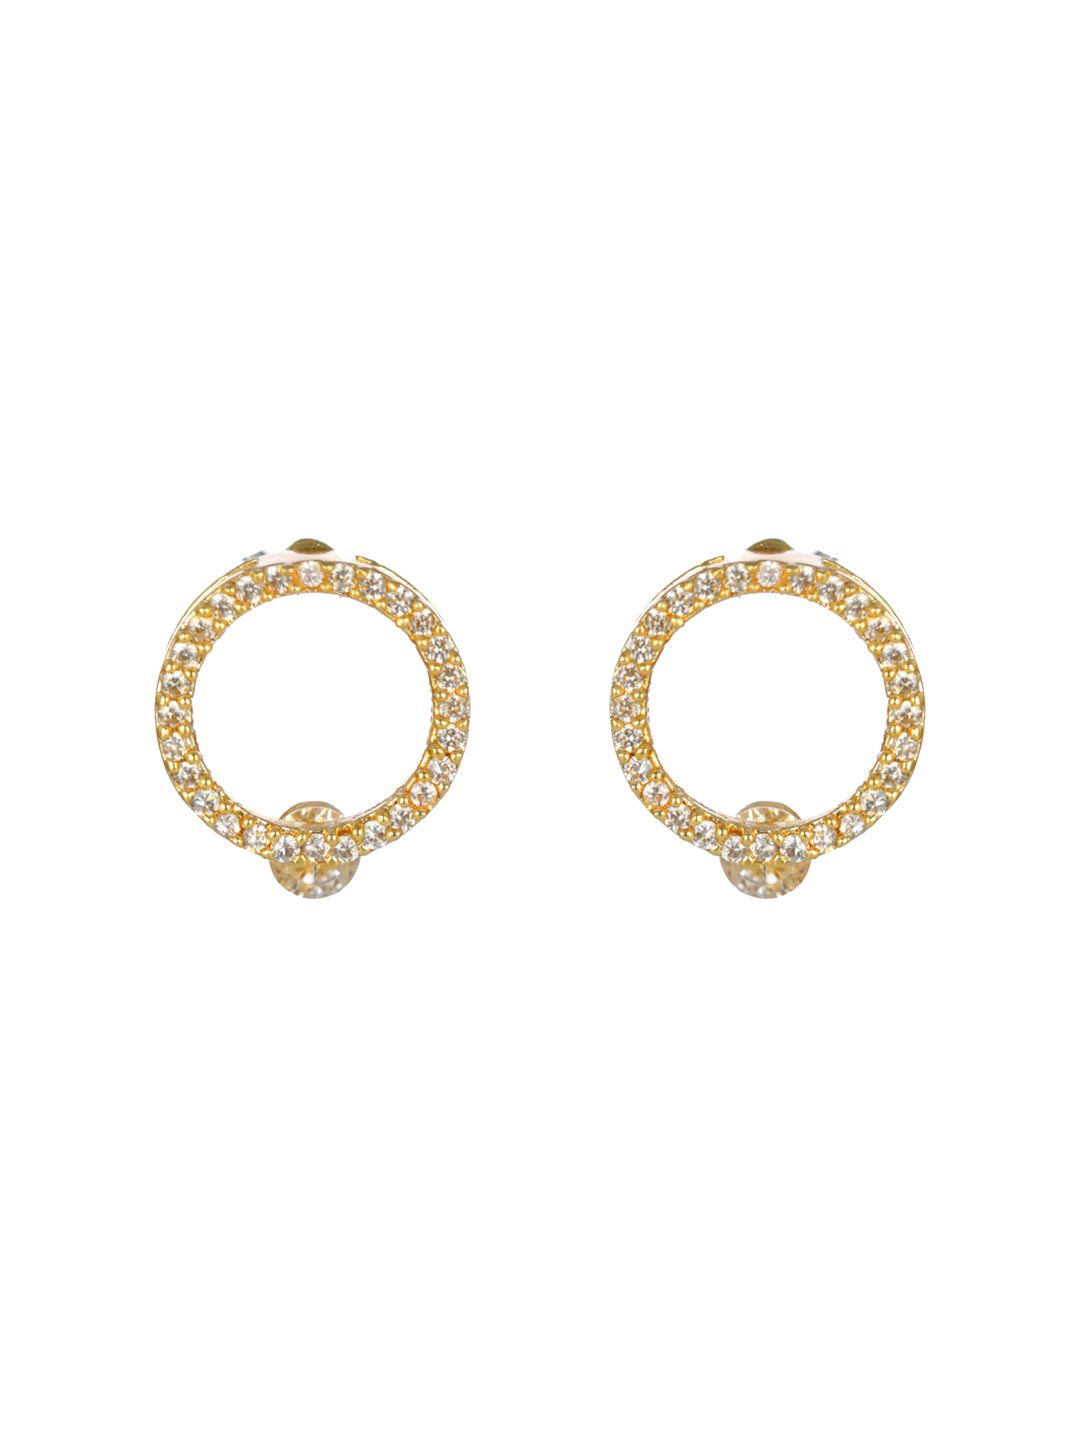 Priyaasi Elegant AD Studded Circular Gold-Plated Jewellery Set